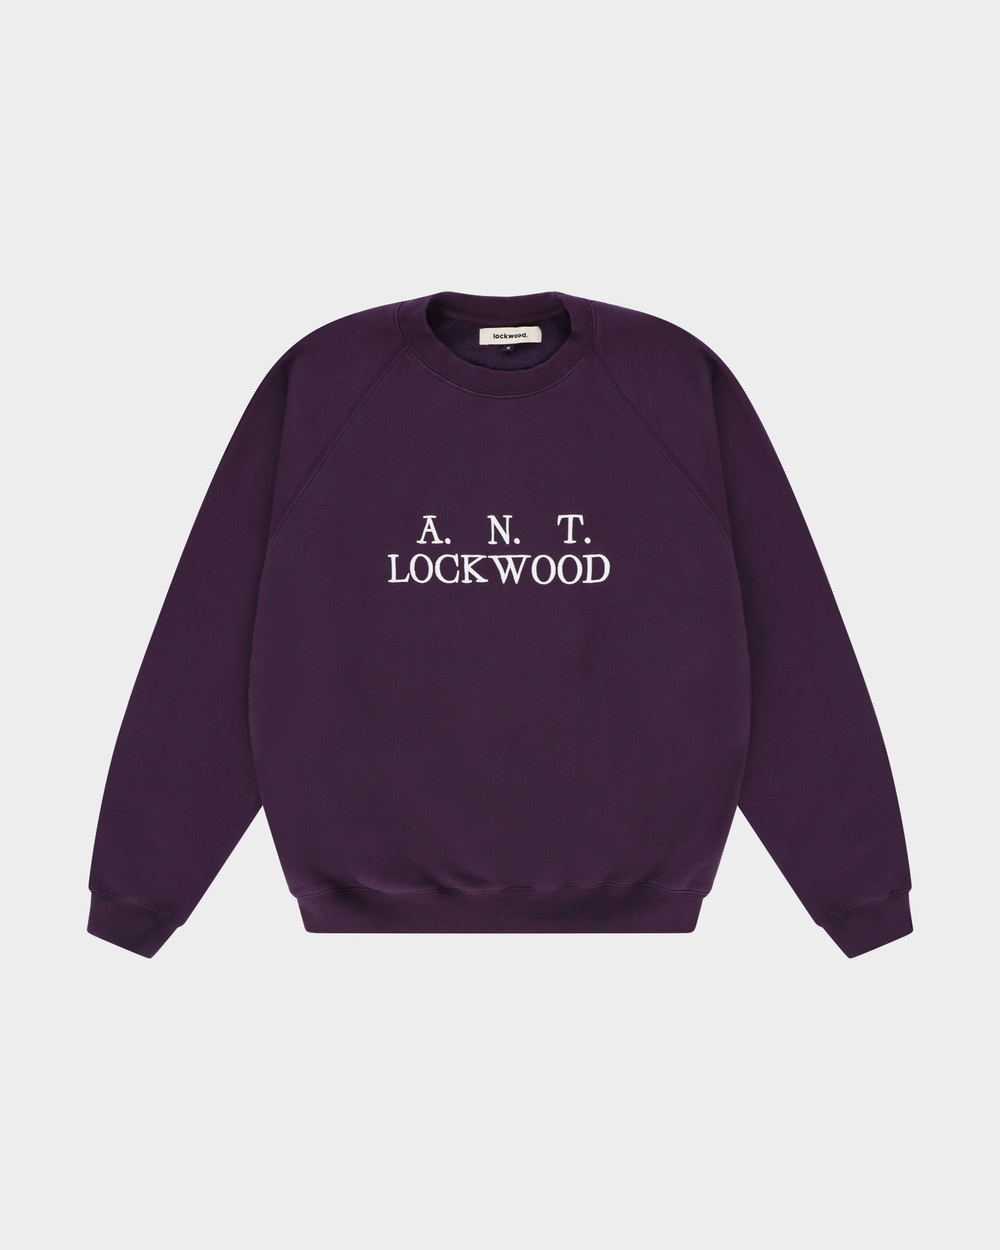 Lockwood Lockwood Initials Antwerp Crewneck Purple